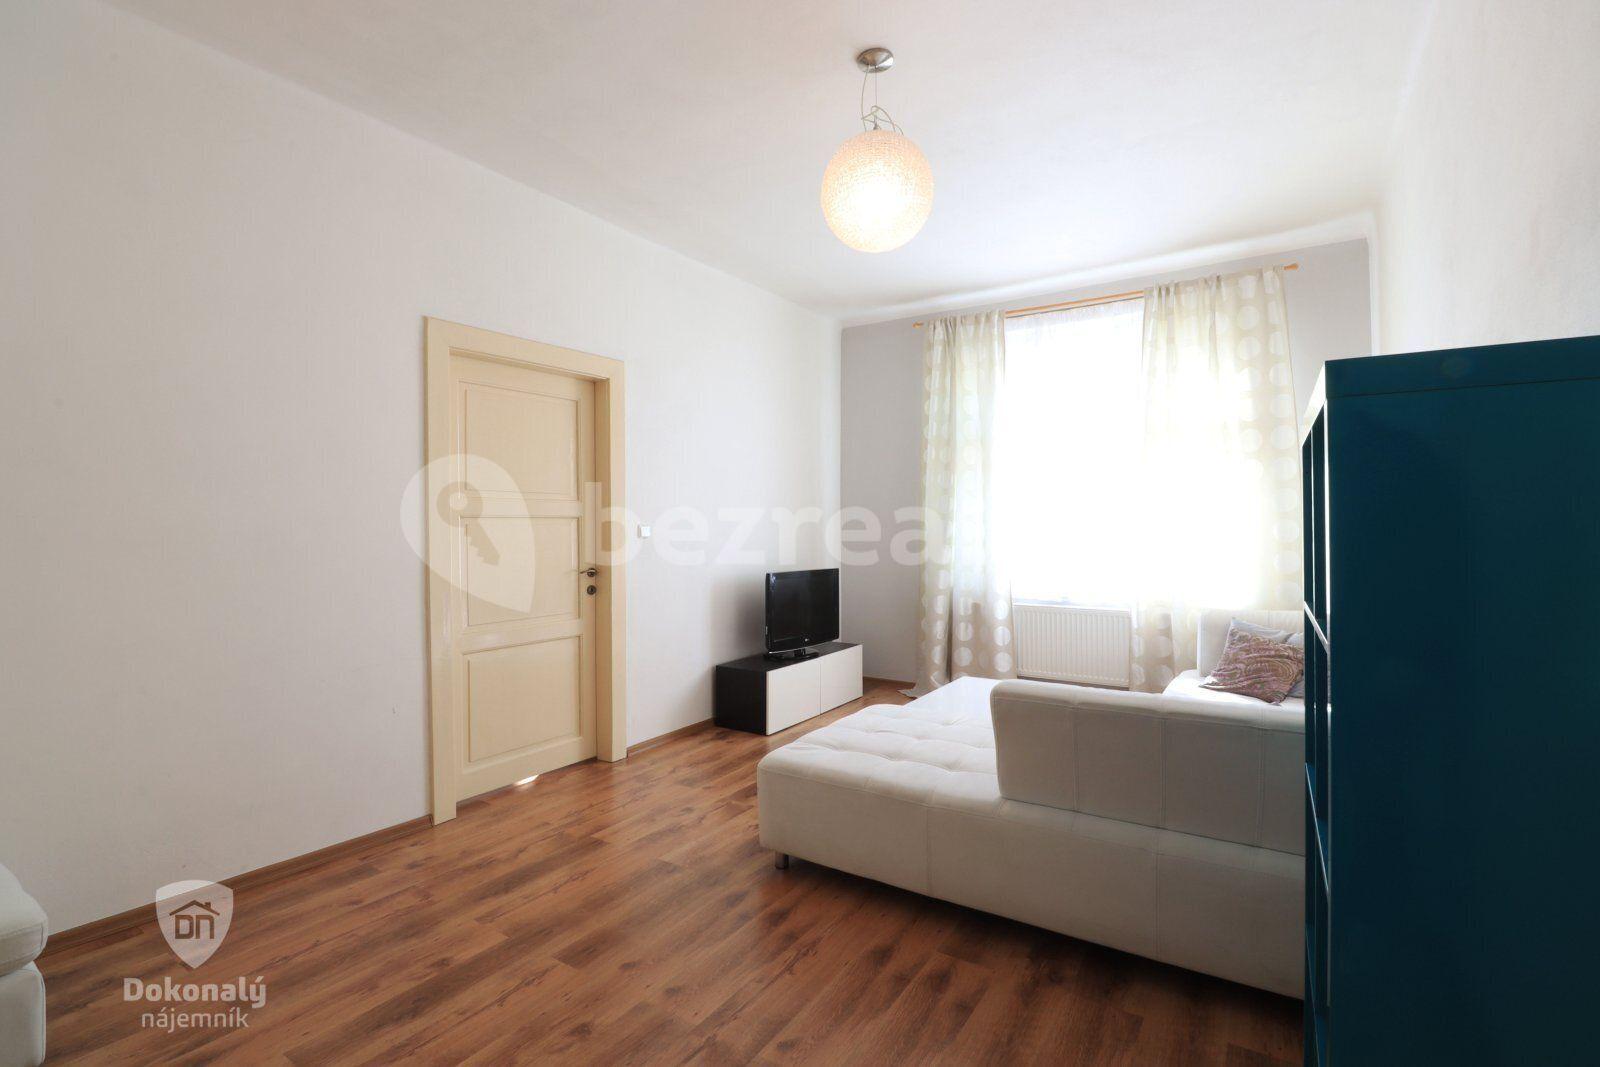 2 bedroom flat to rent, 83 m², Sudoměřská, Prague, Prague